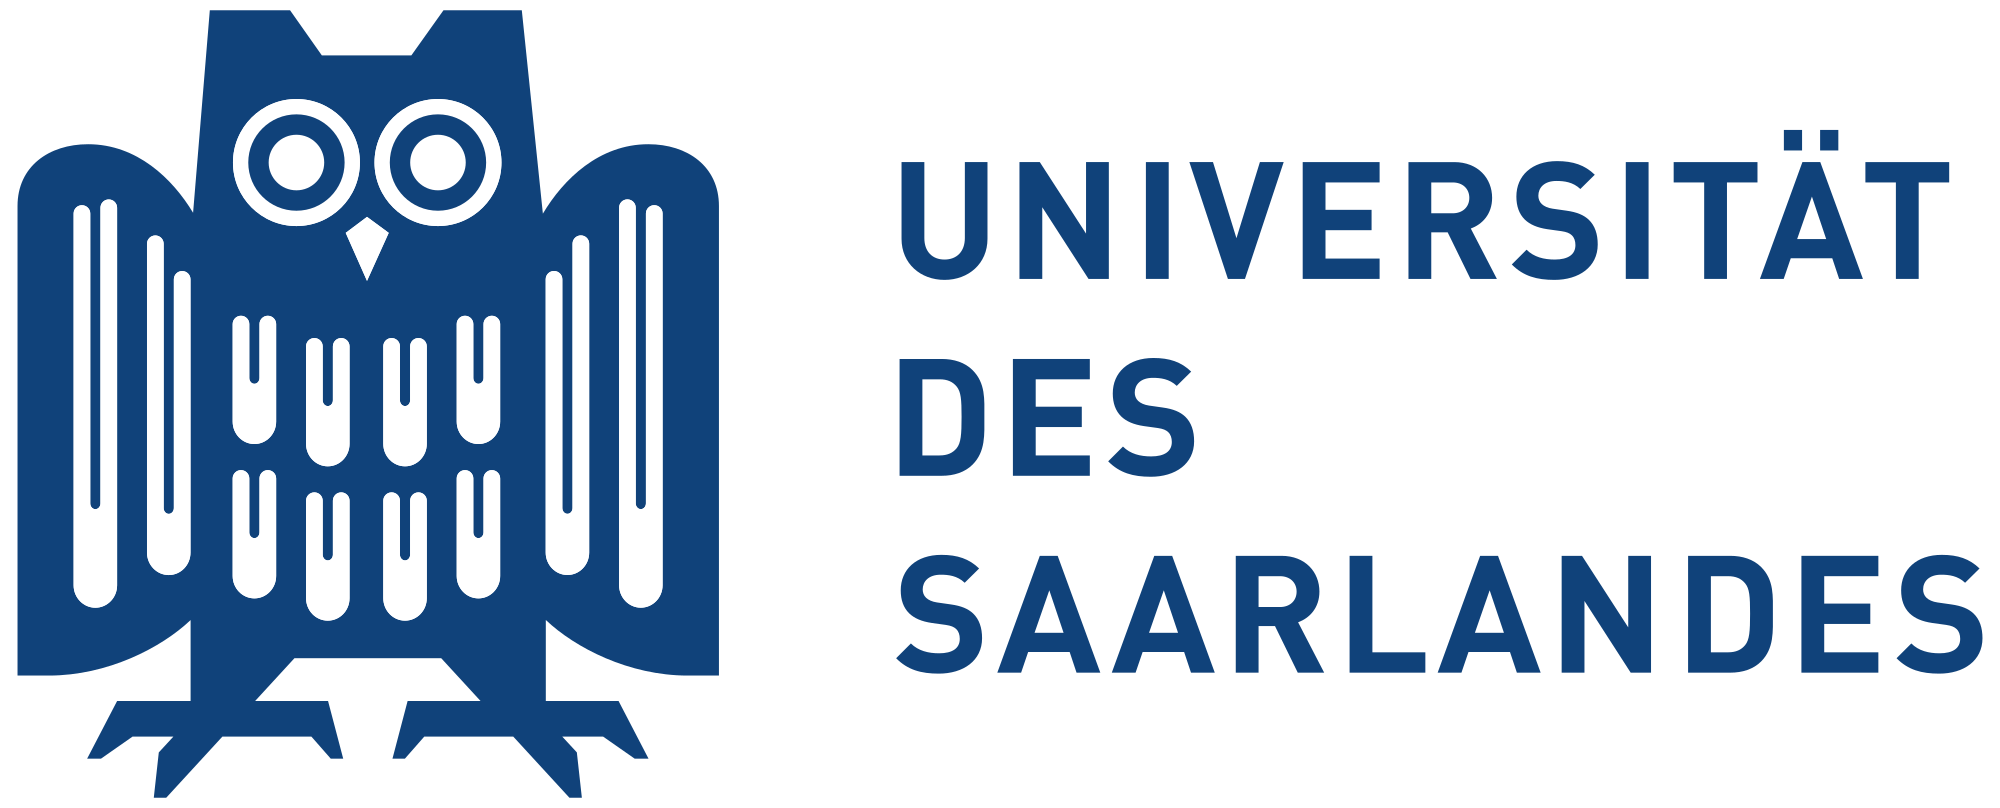 Saarland University, Institute for German Language